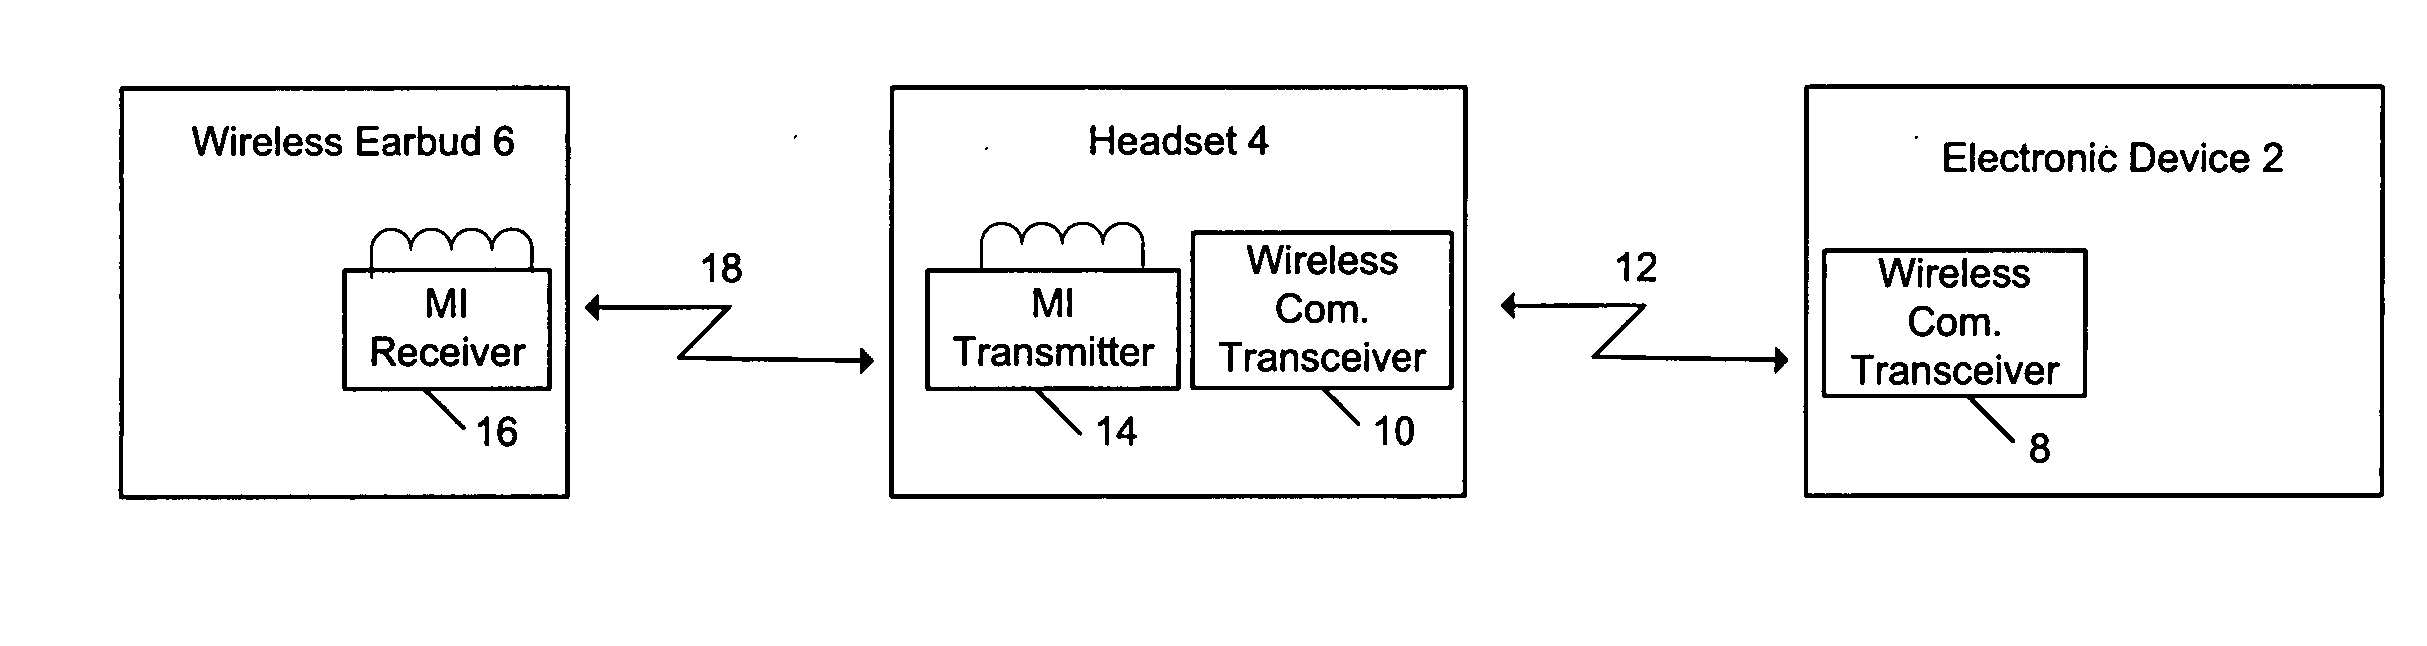 Wireless stereo headset